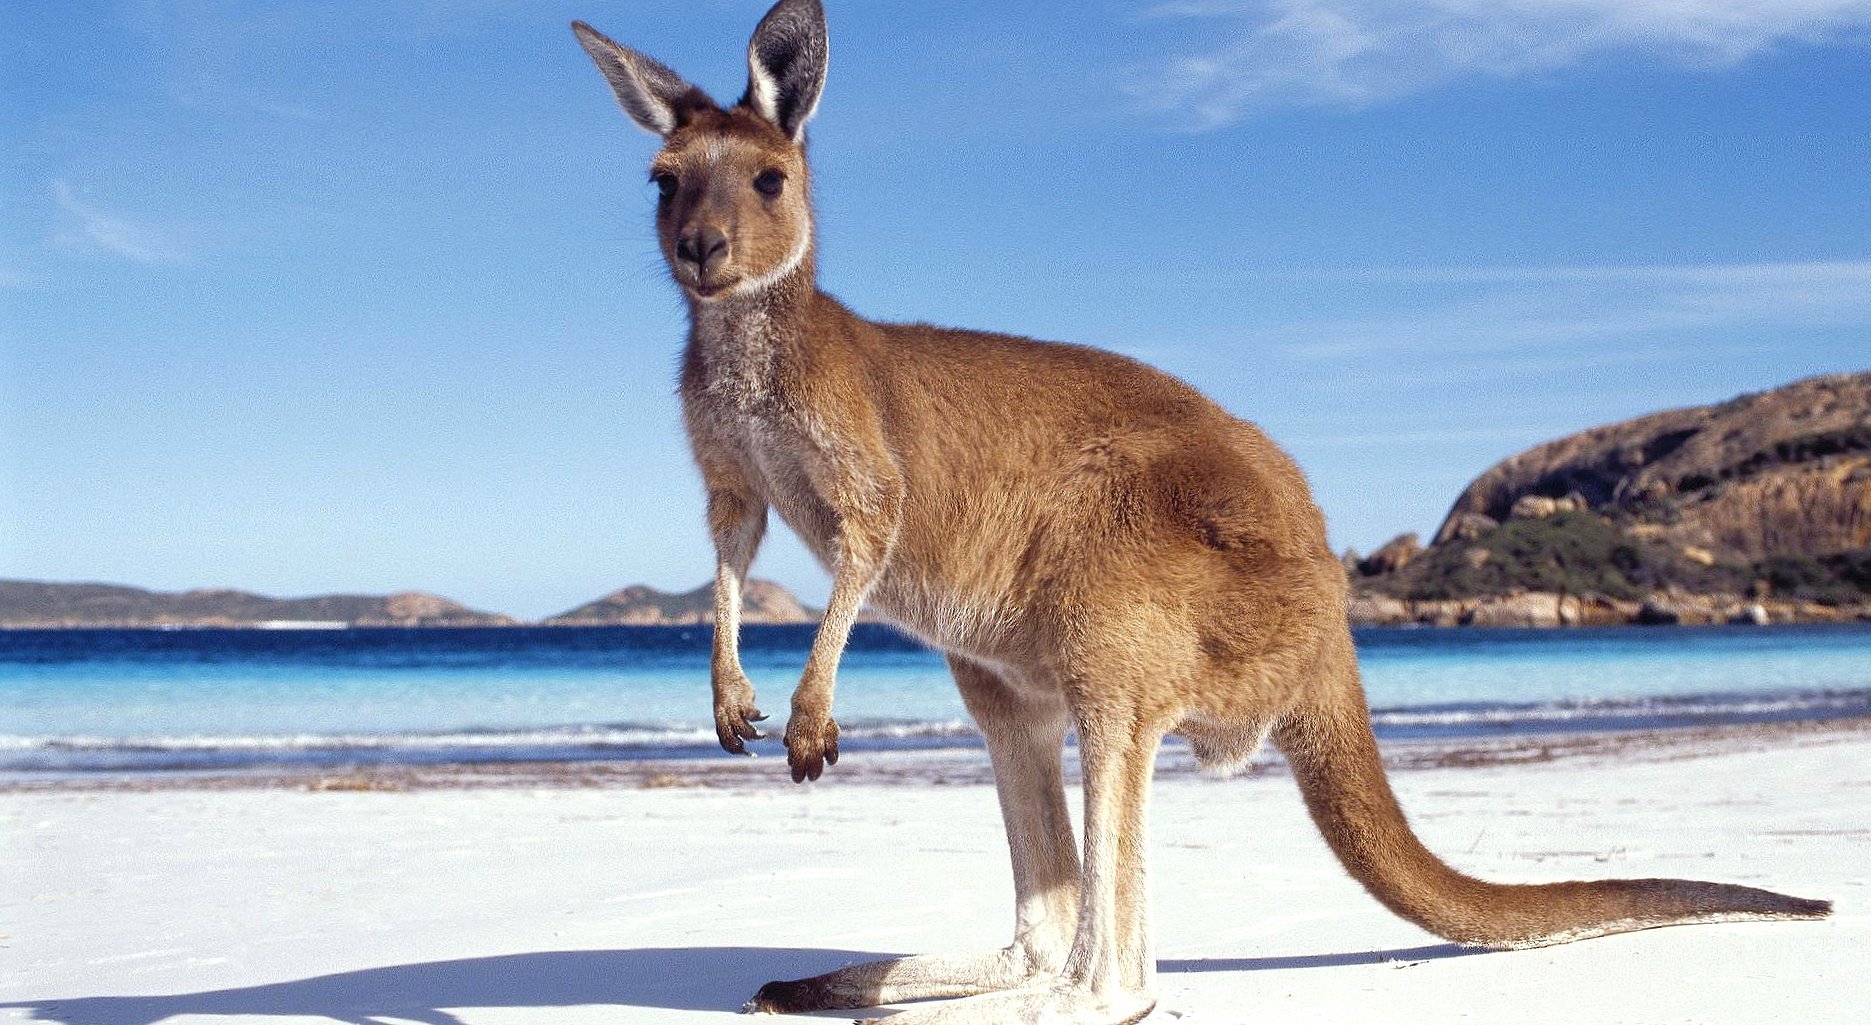 Beach kangaroo at 1024 x 768 size wallpapers HD quality